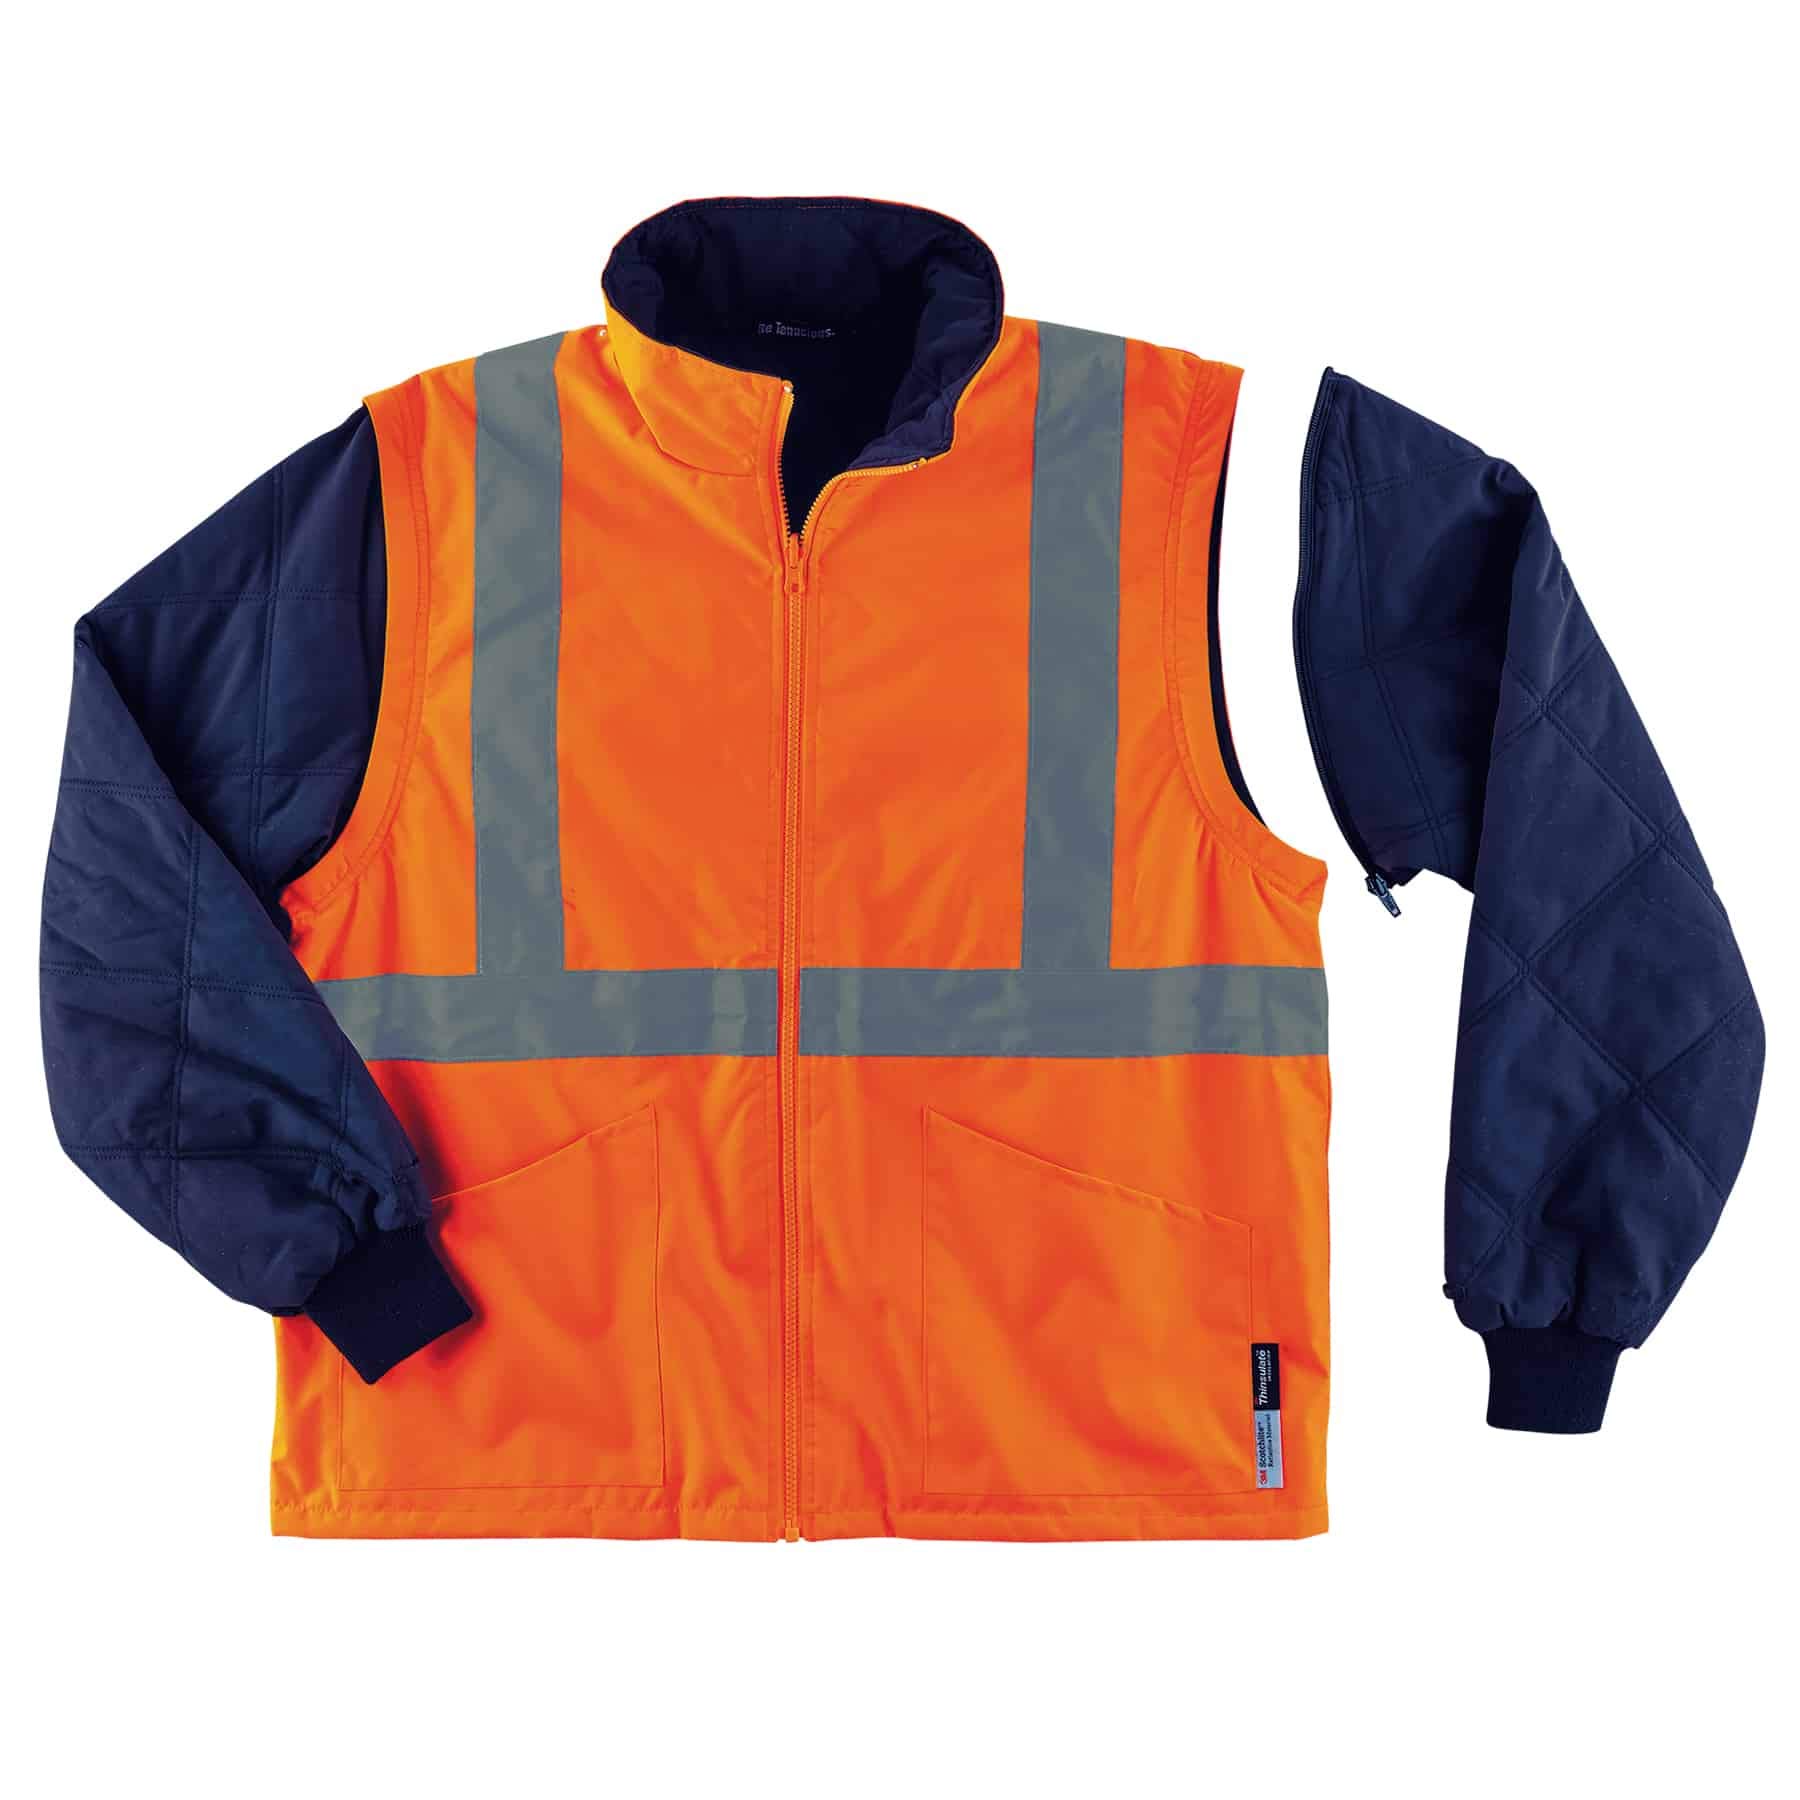 Ergodyne GloWear 8385 ANSI High Visibility 4-in-1 Reflective Safety Jacket, Orange, Small